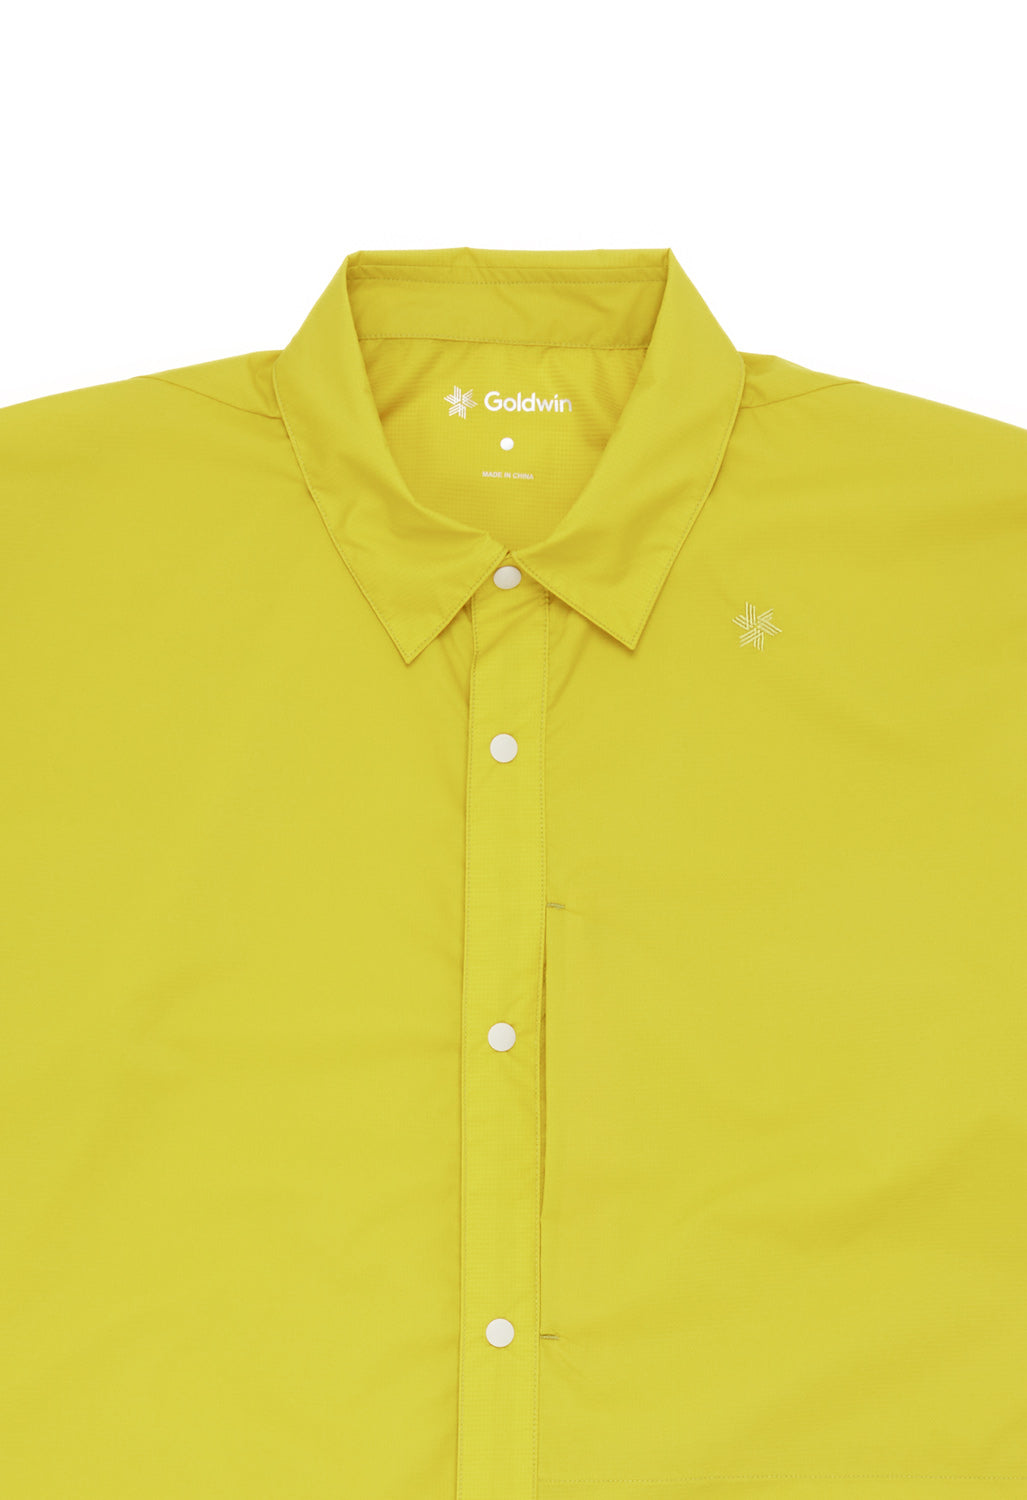 Goldwin Men's PERTEX Double Cloth Short Sleeve Hike Shirt - Acid Yellow